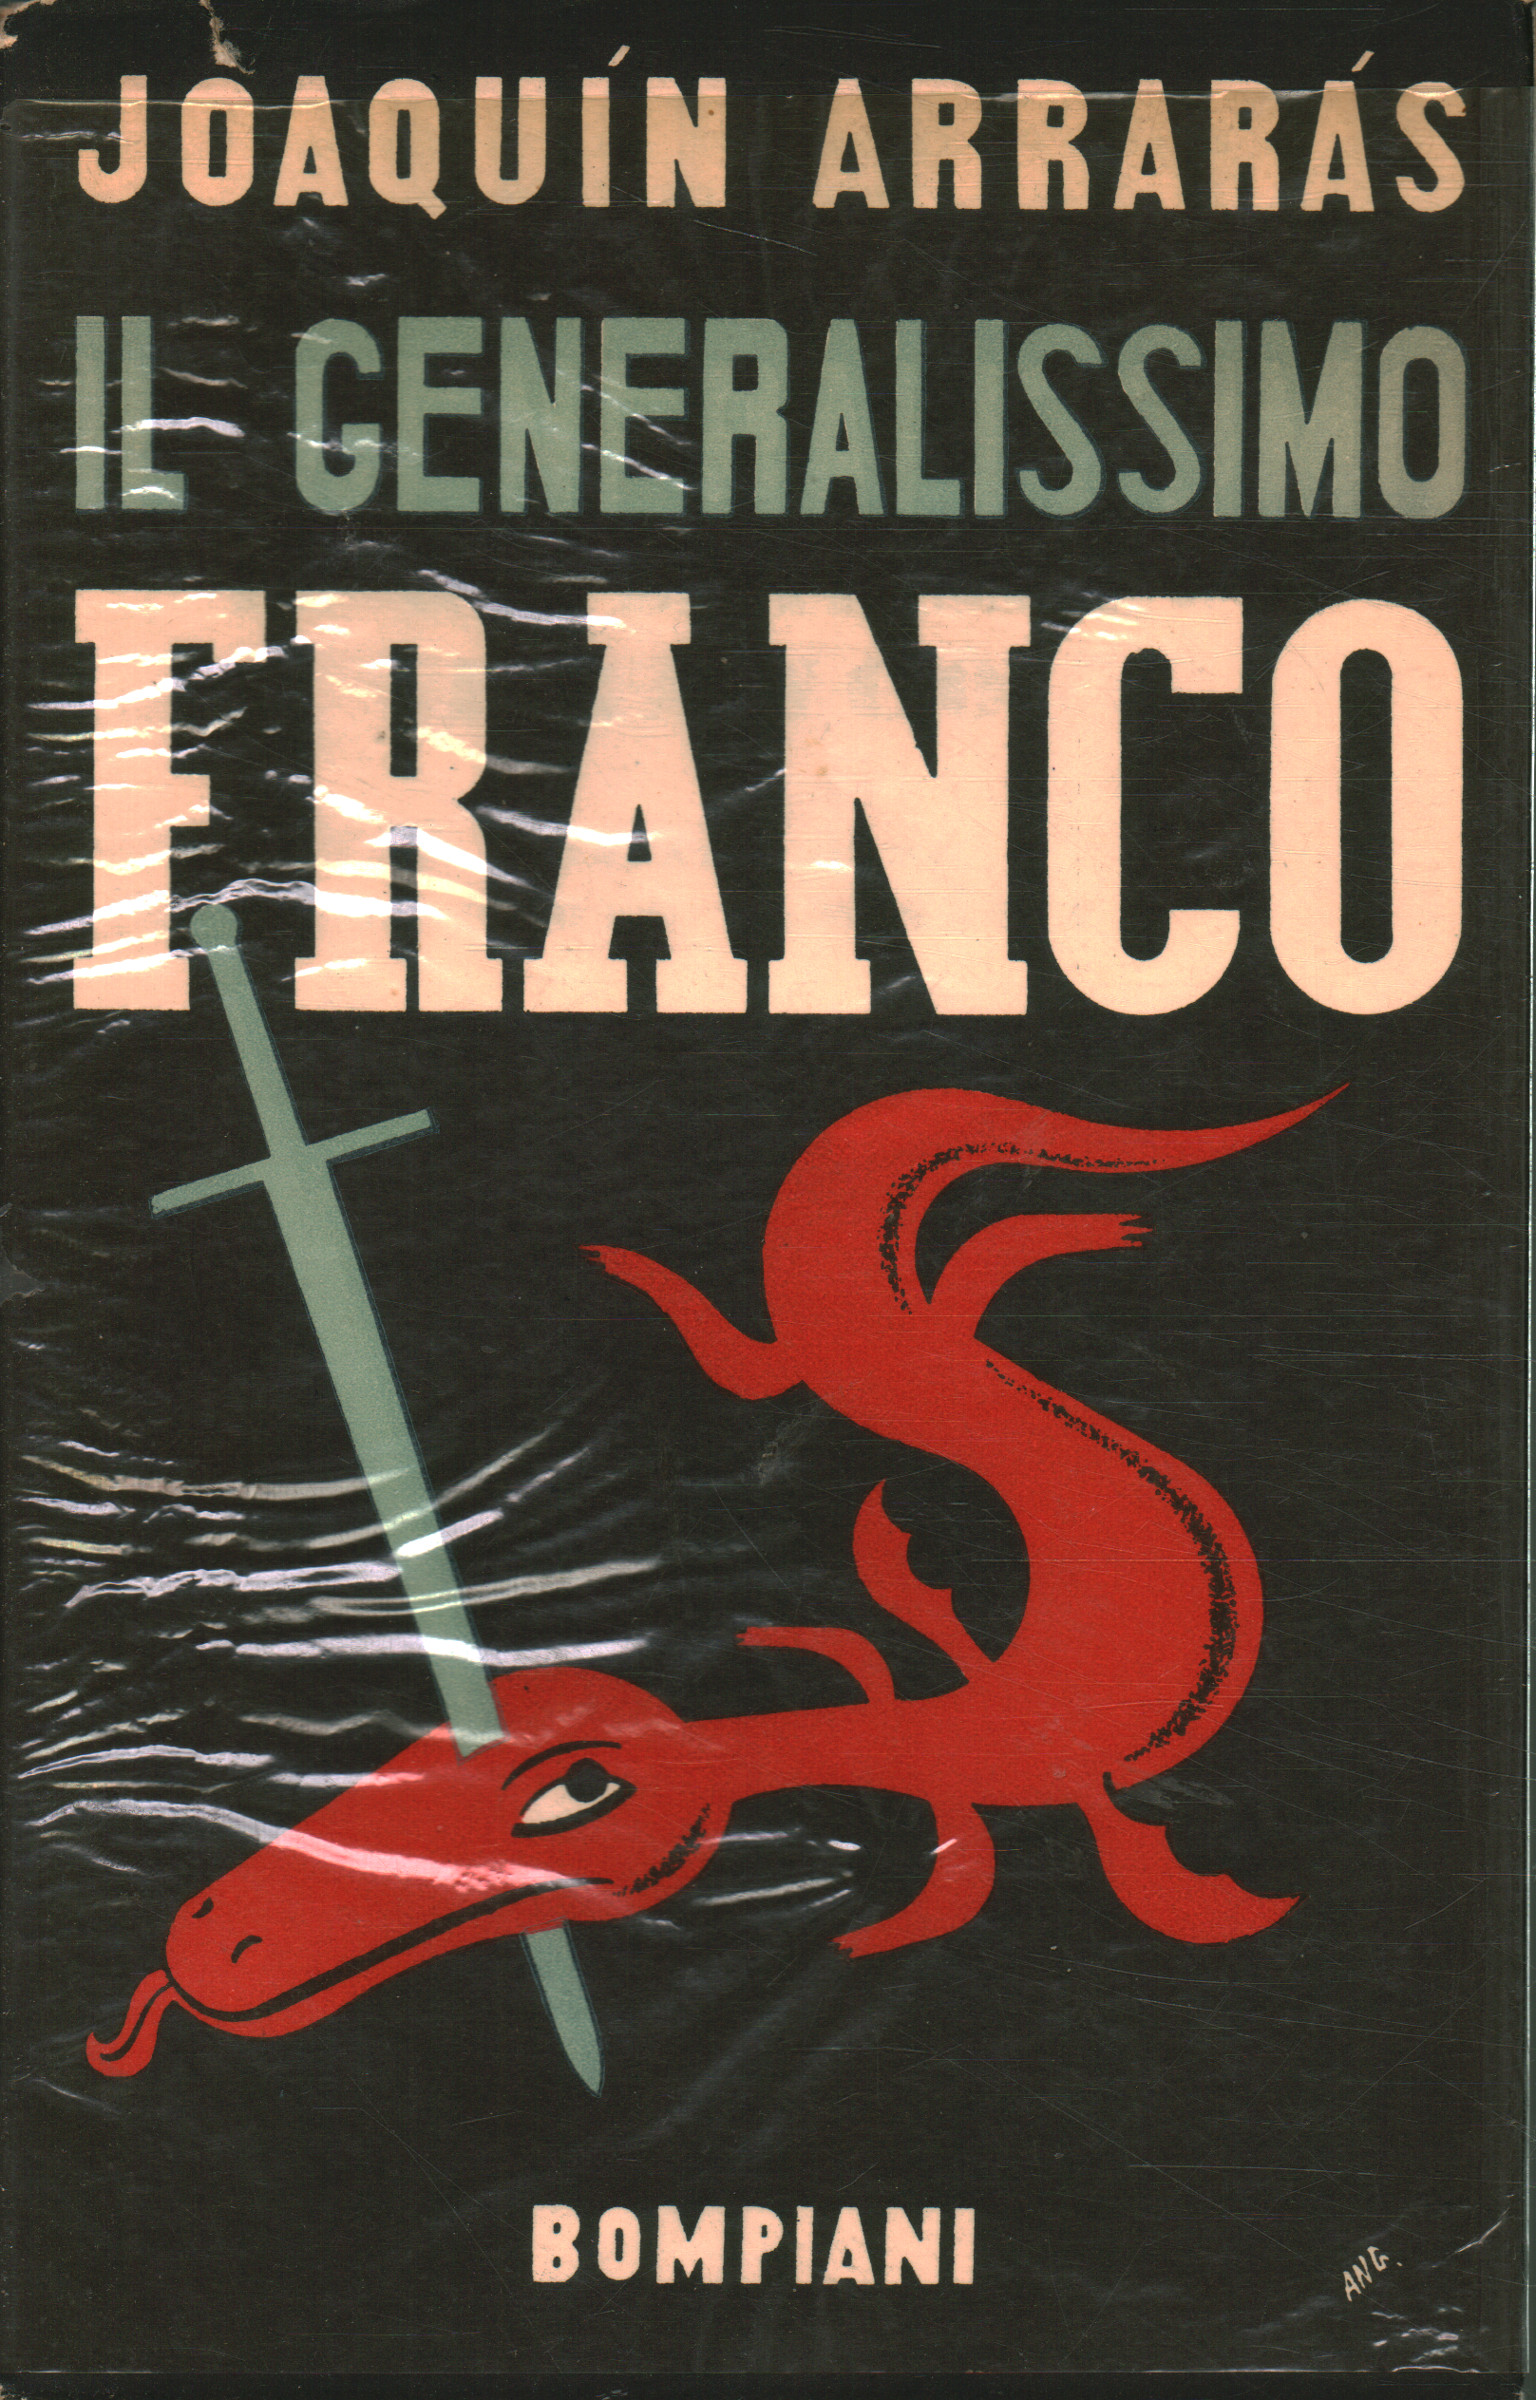 The Generalissimo Franco